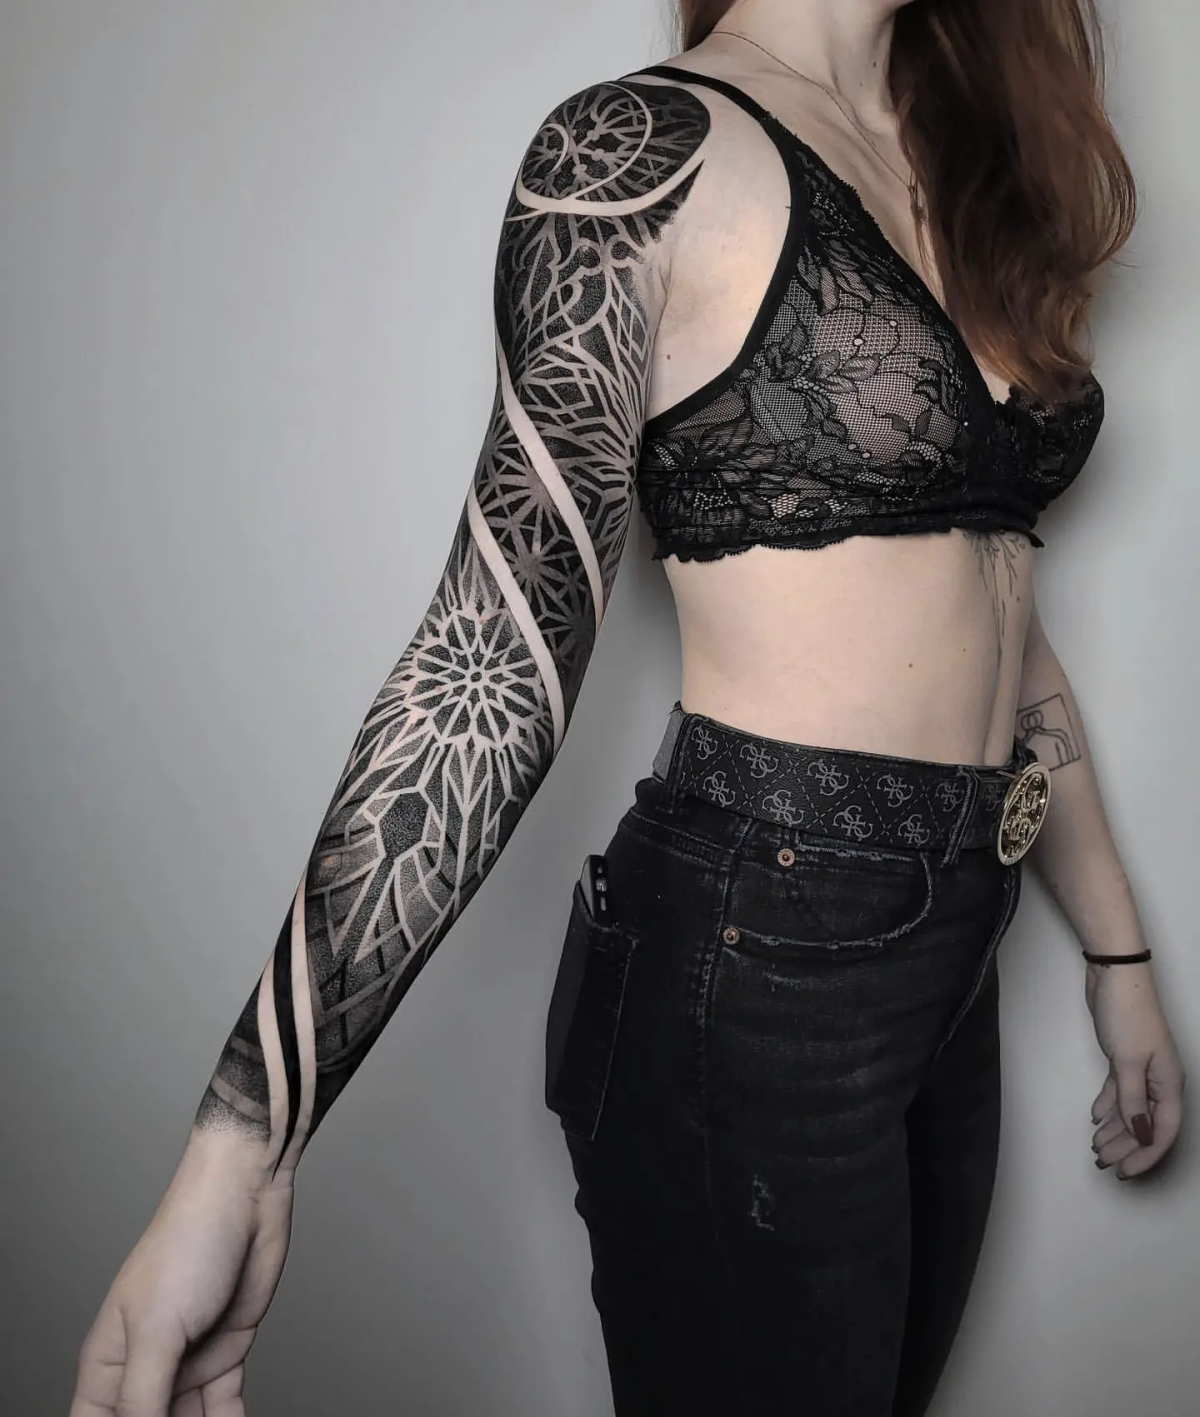 tattoo ideas for female sleeve.jpg